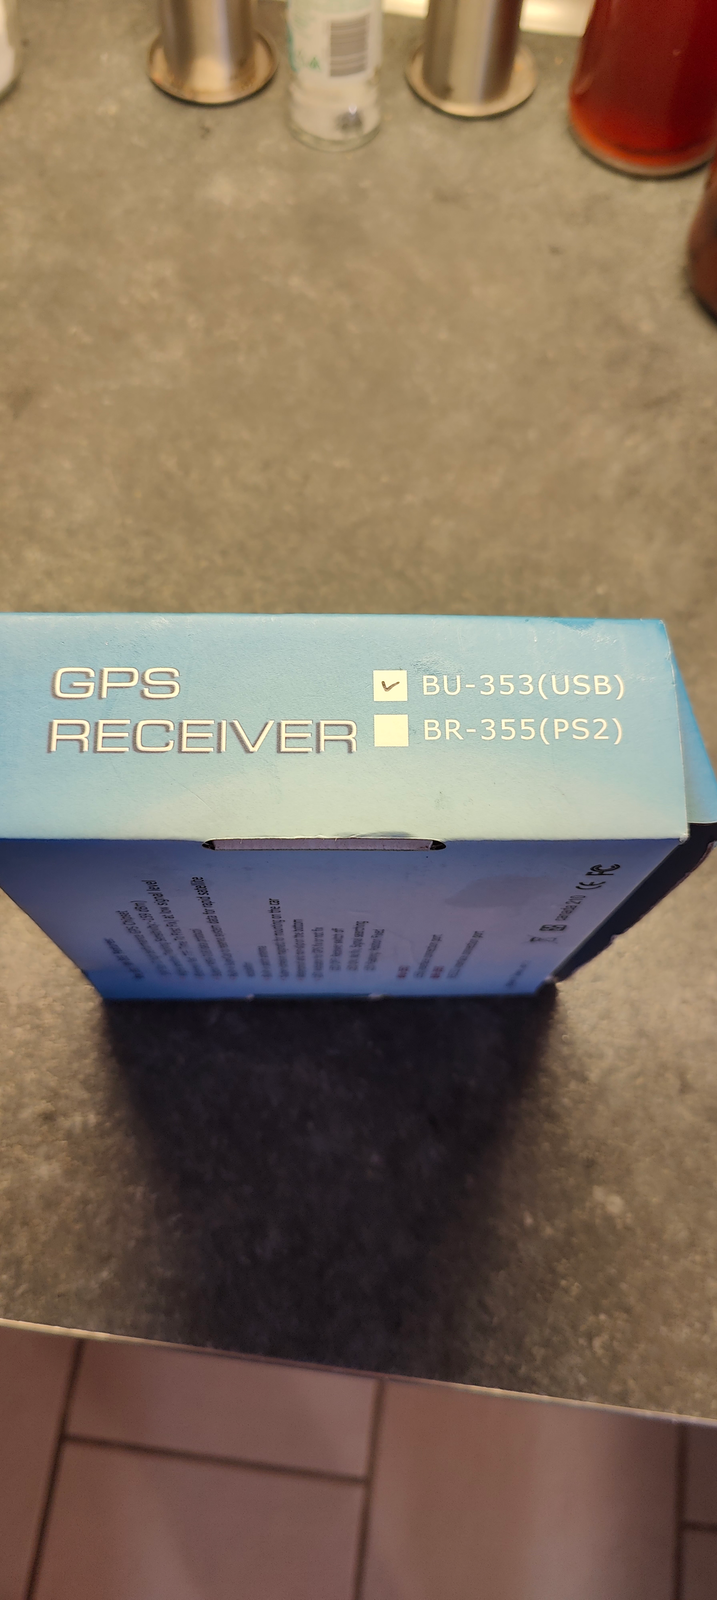 Navigation/GPS BU-353 (USB)